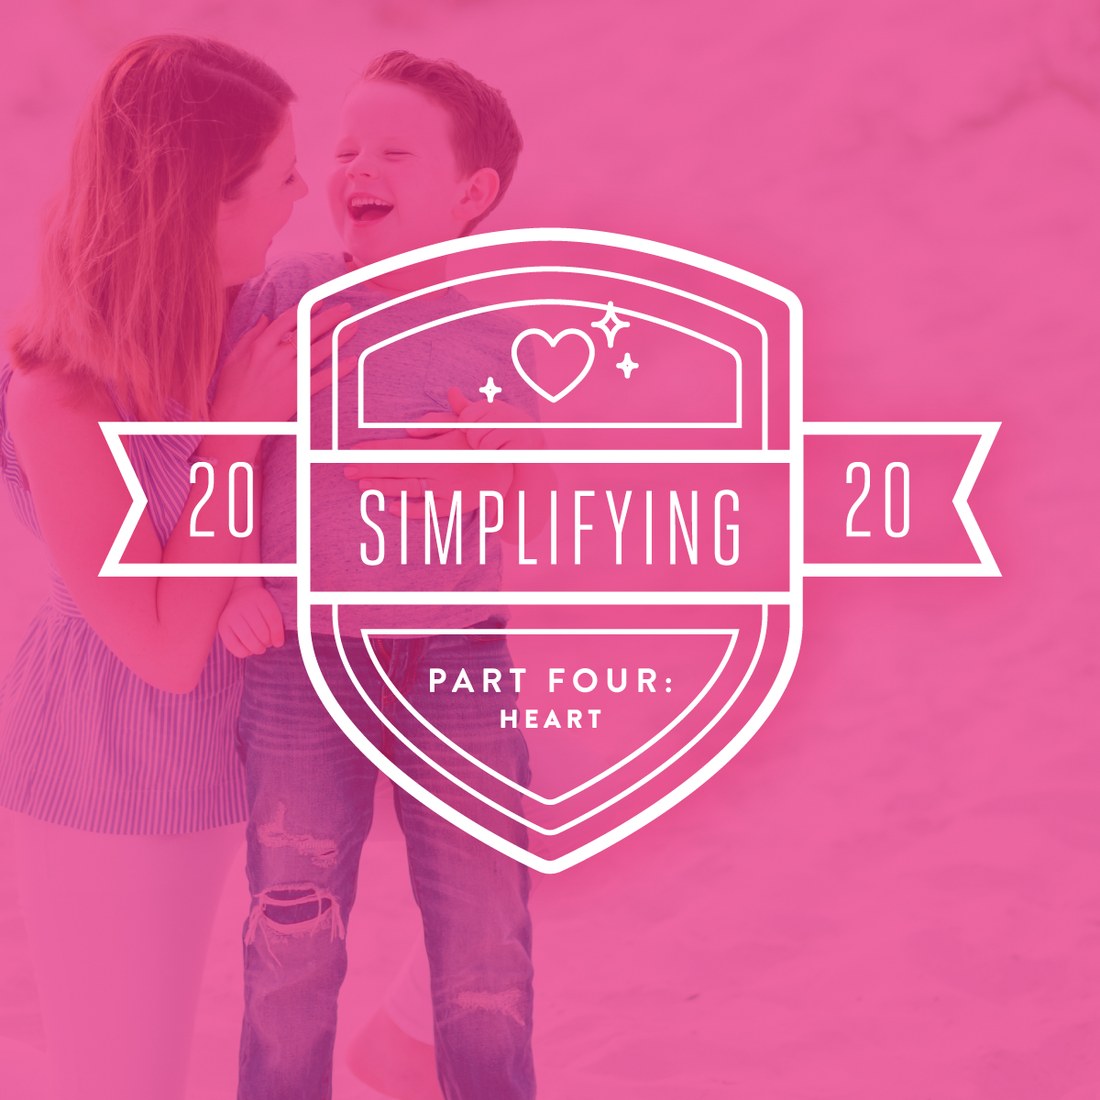 Simplifying 2020: Part 4 - Heart